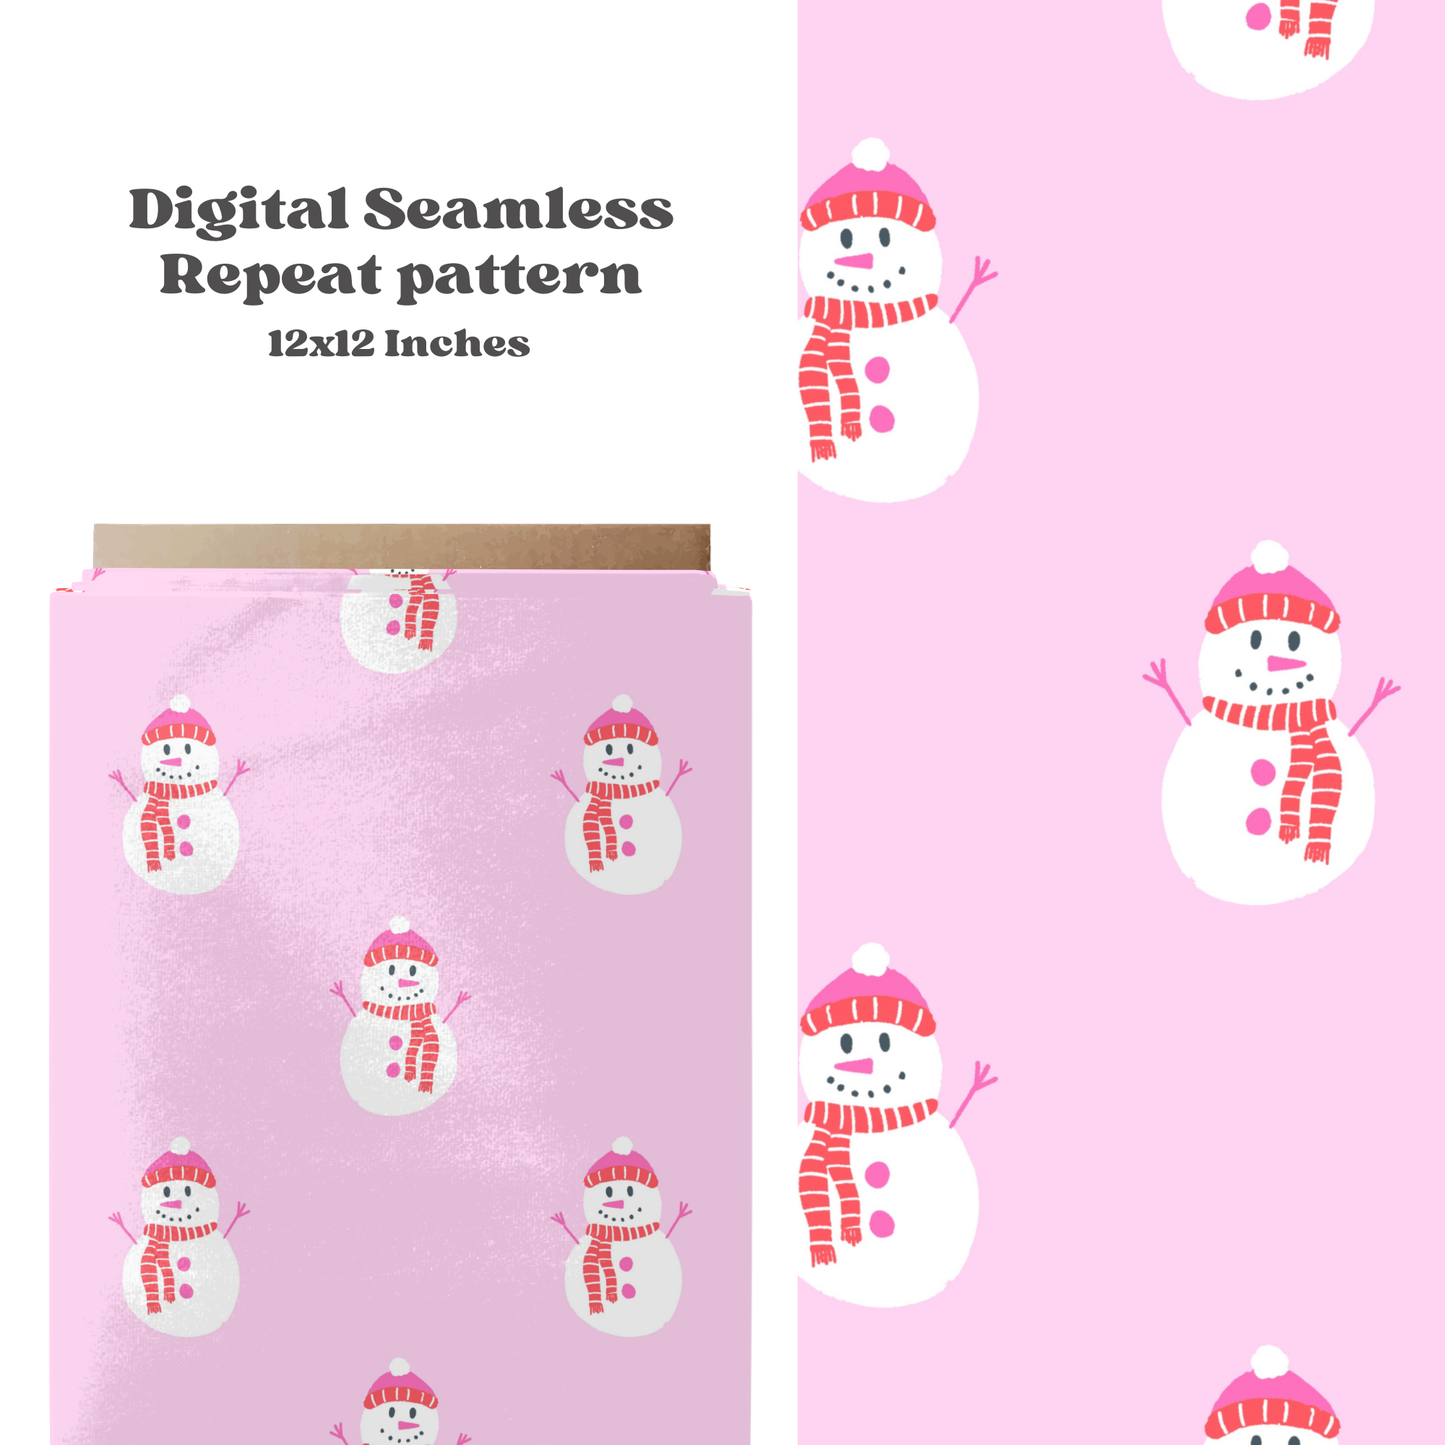 Pink Christmas Snowmen Seamless Pattern